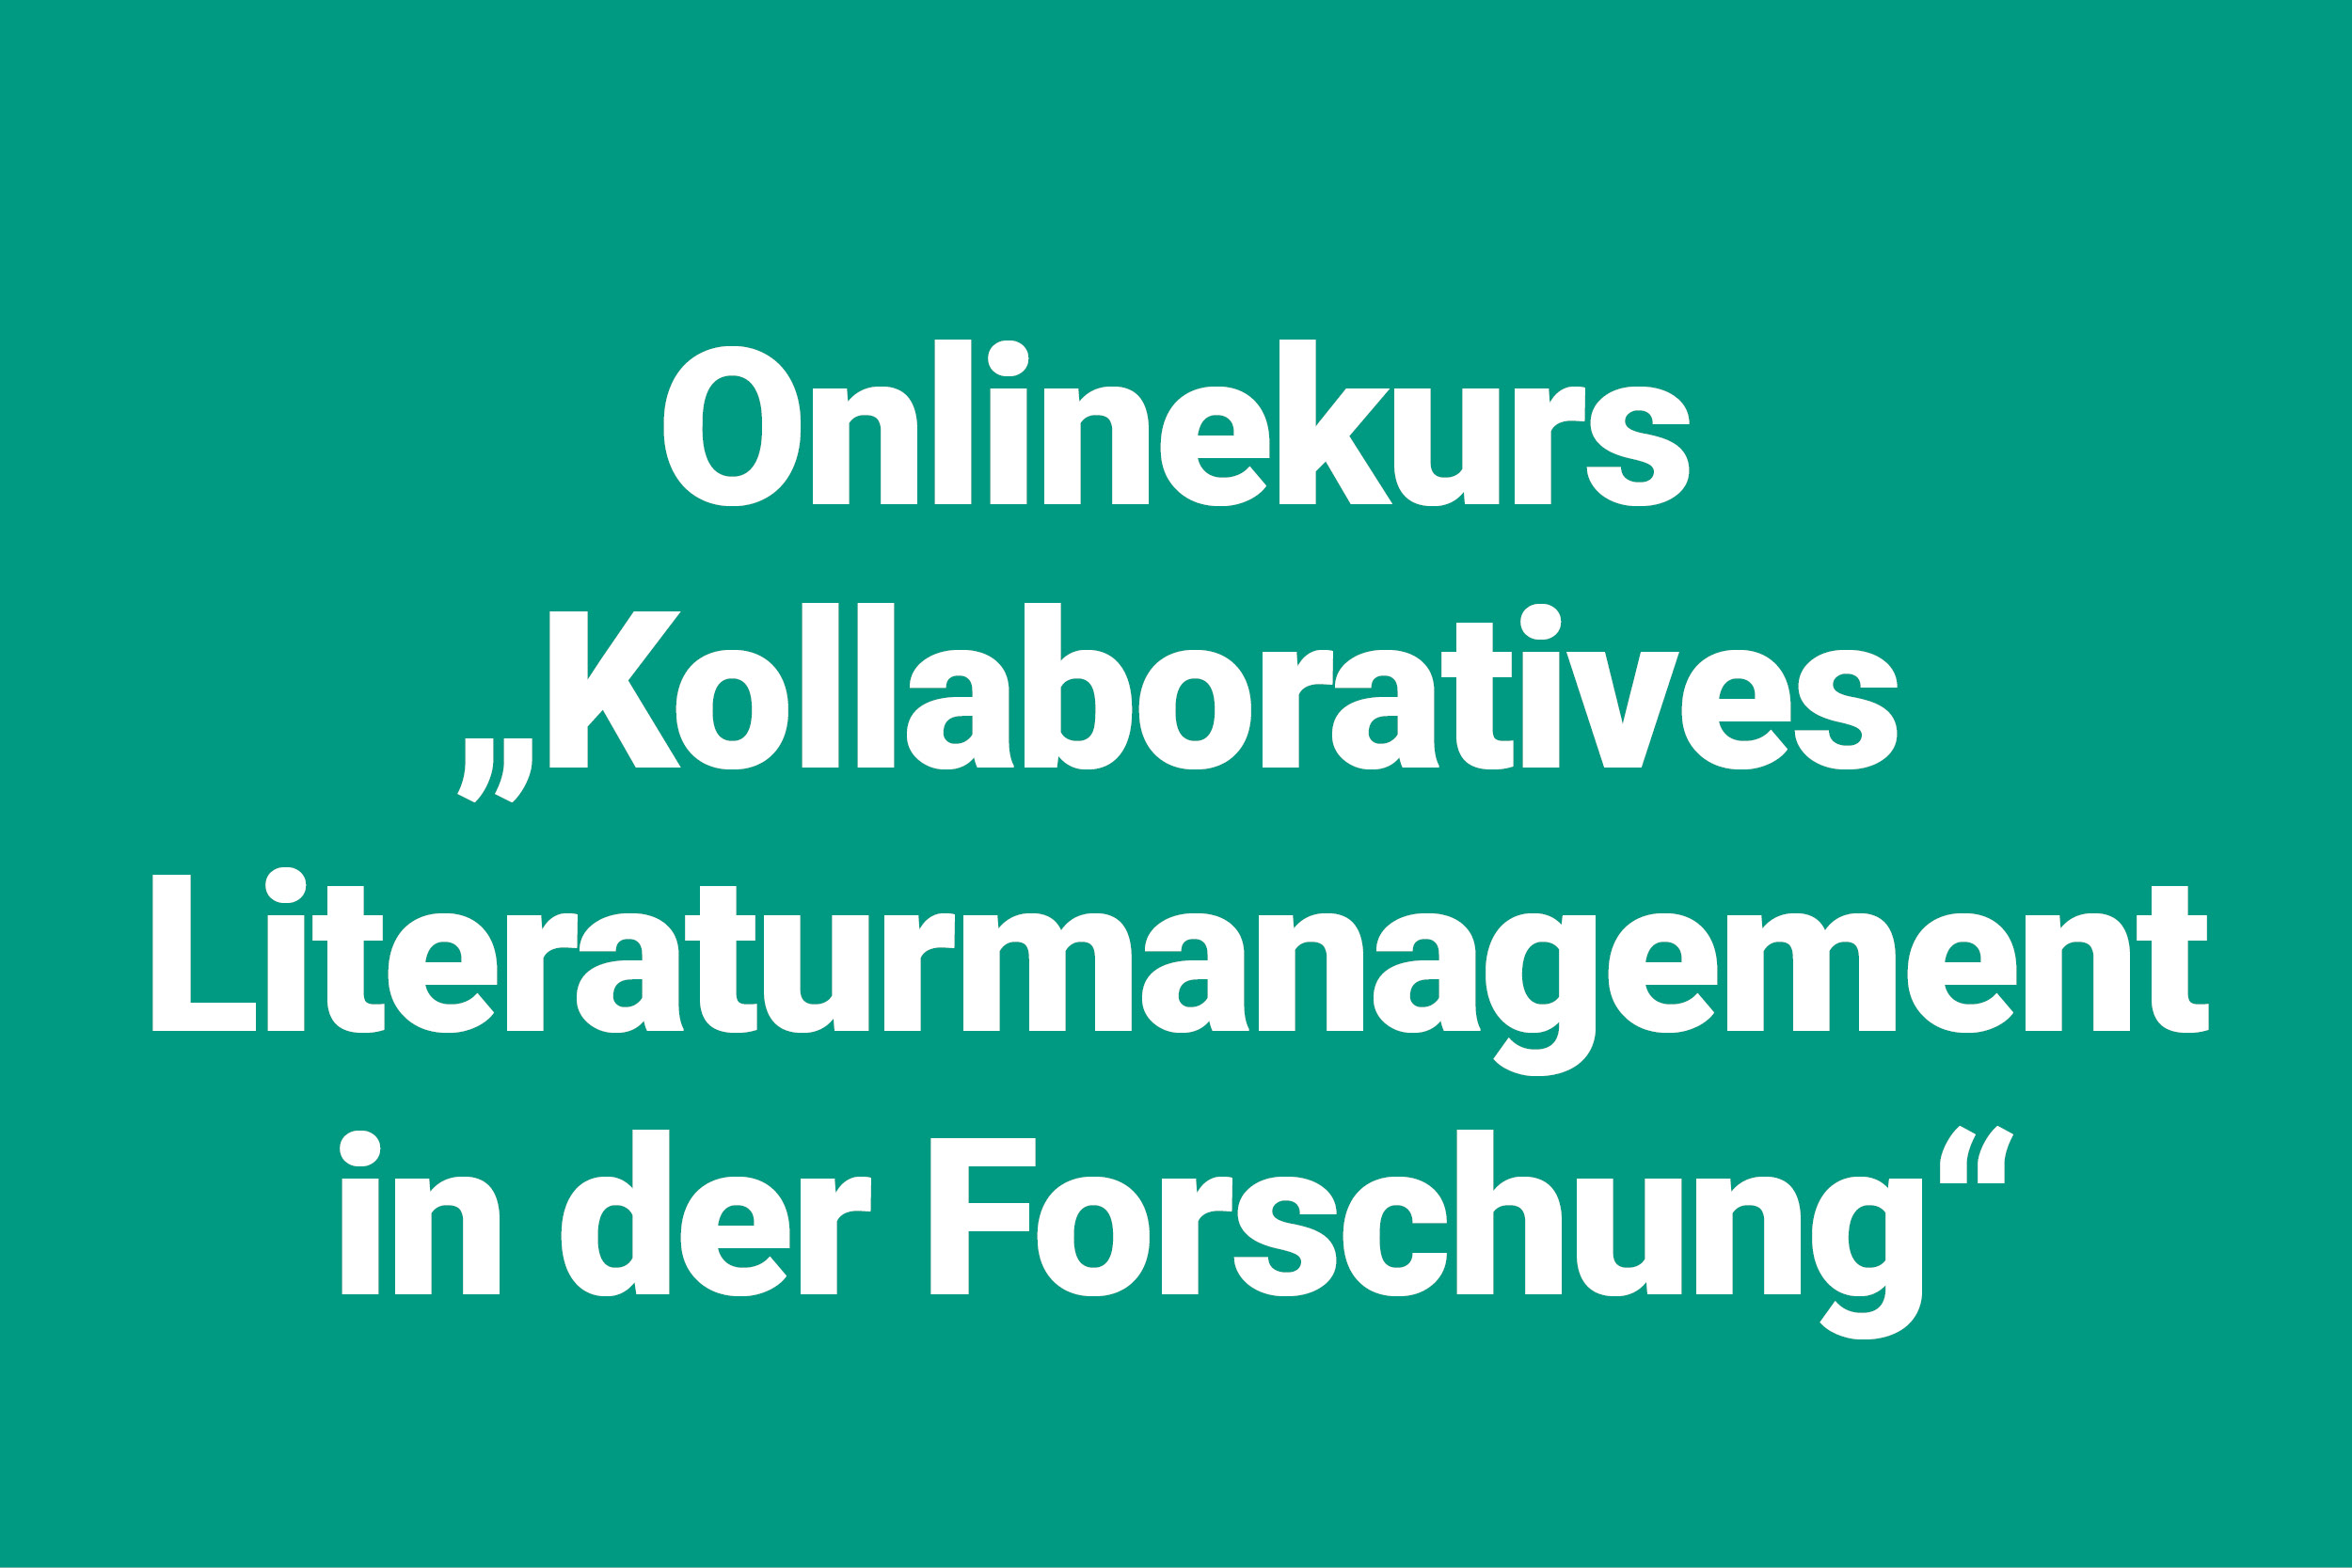 BIB-S-Projekt_Onlinekurs-Kollaboratives-Lit-Management_600x400